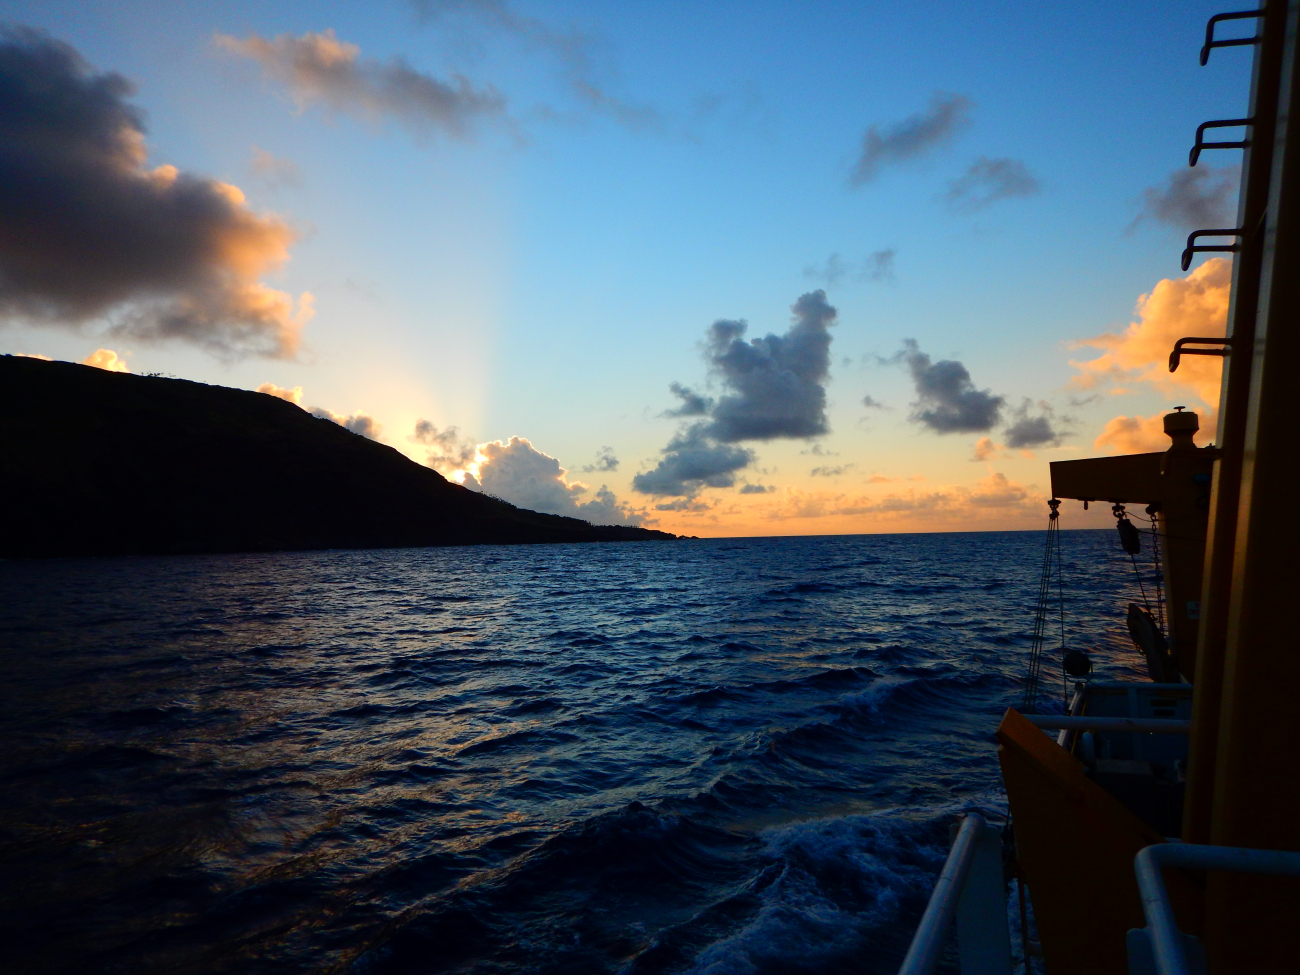 Cruising along an island at sunset